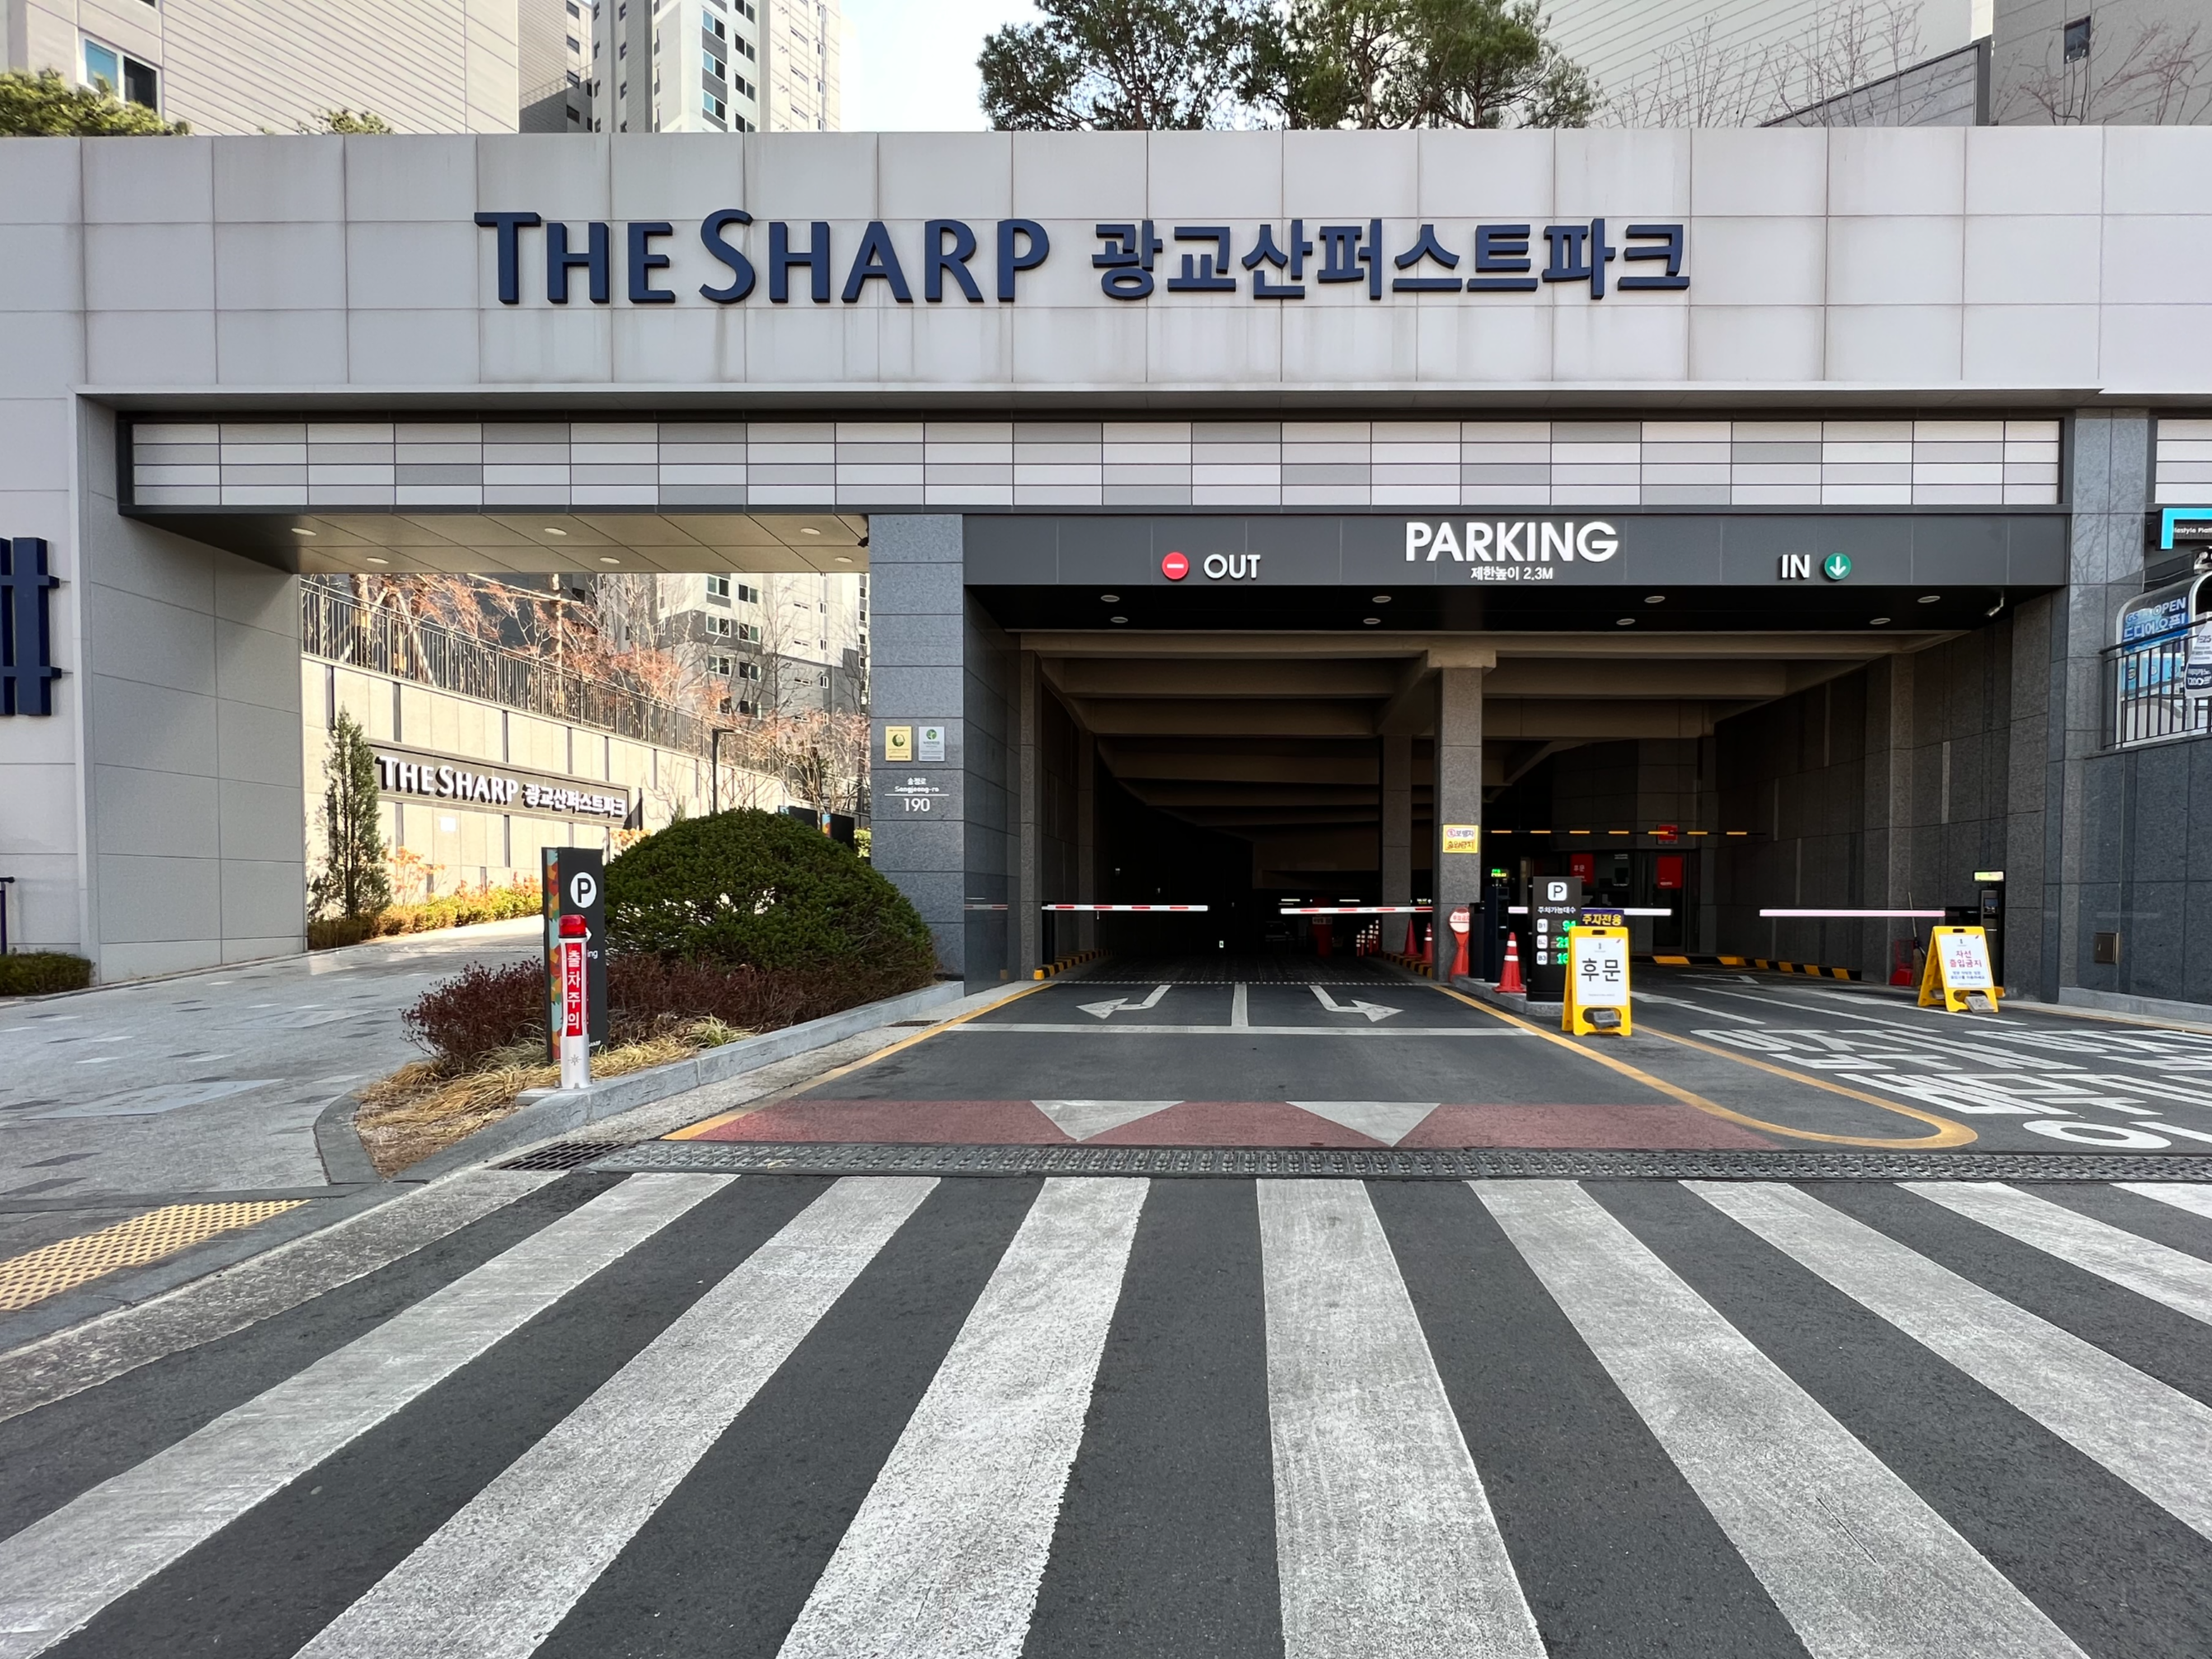 THE SHARP 광교산퍼스트파크 게이트